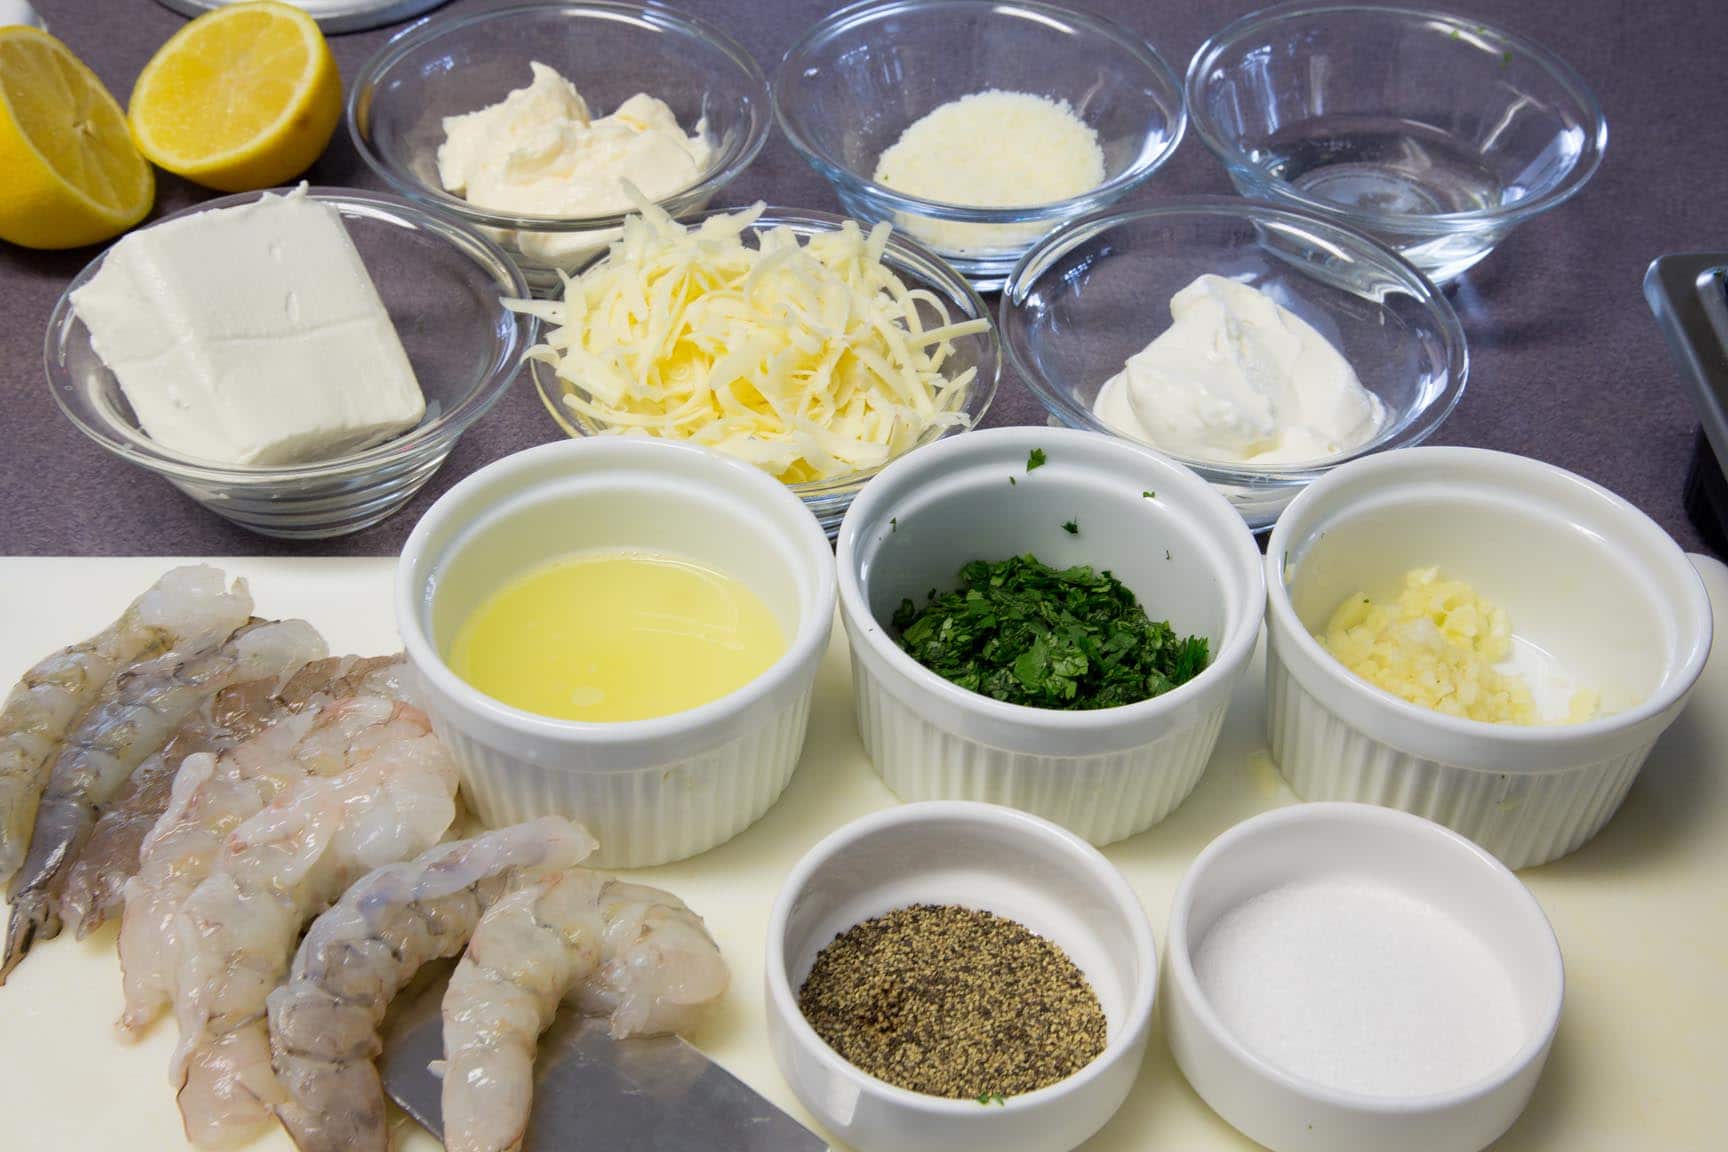 ingredients to make recipe in bowls and white ramekins